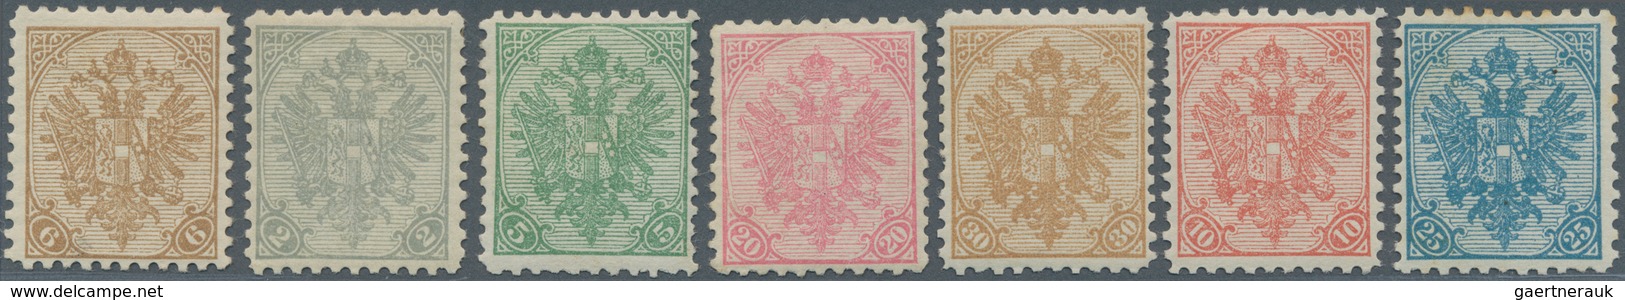 Bosnien Und Herzegowina (Österreich 1879/1918): 1900 (Mar - April). NEW CURRENCY. 2(H) Pearl-grey, 5 - Bosnië En Herzegovina